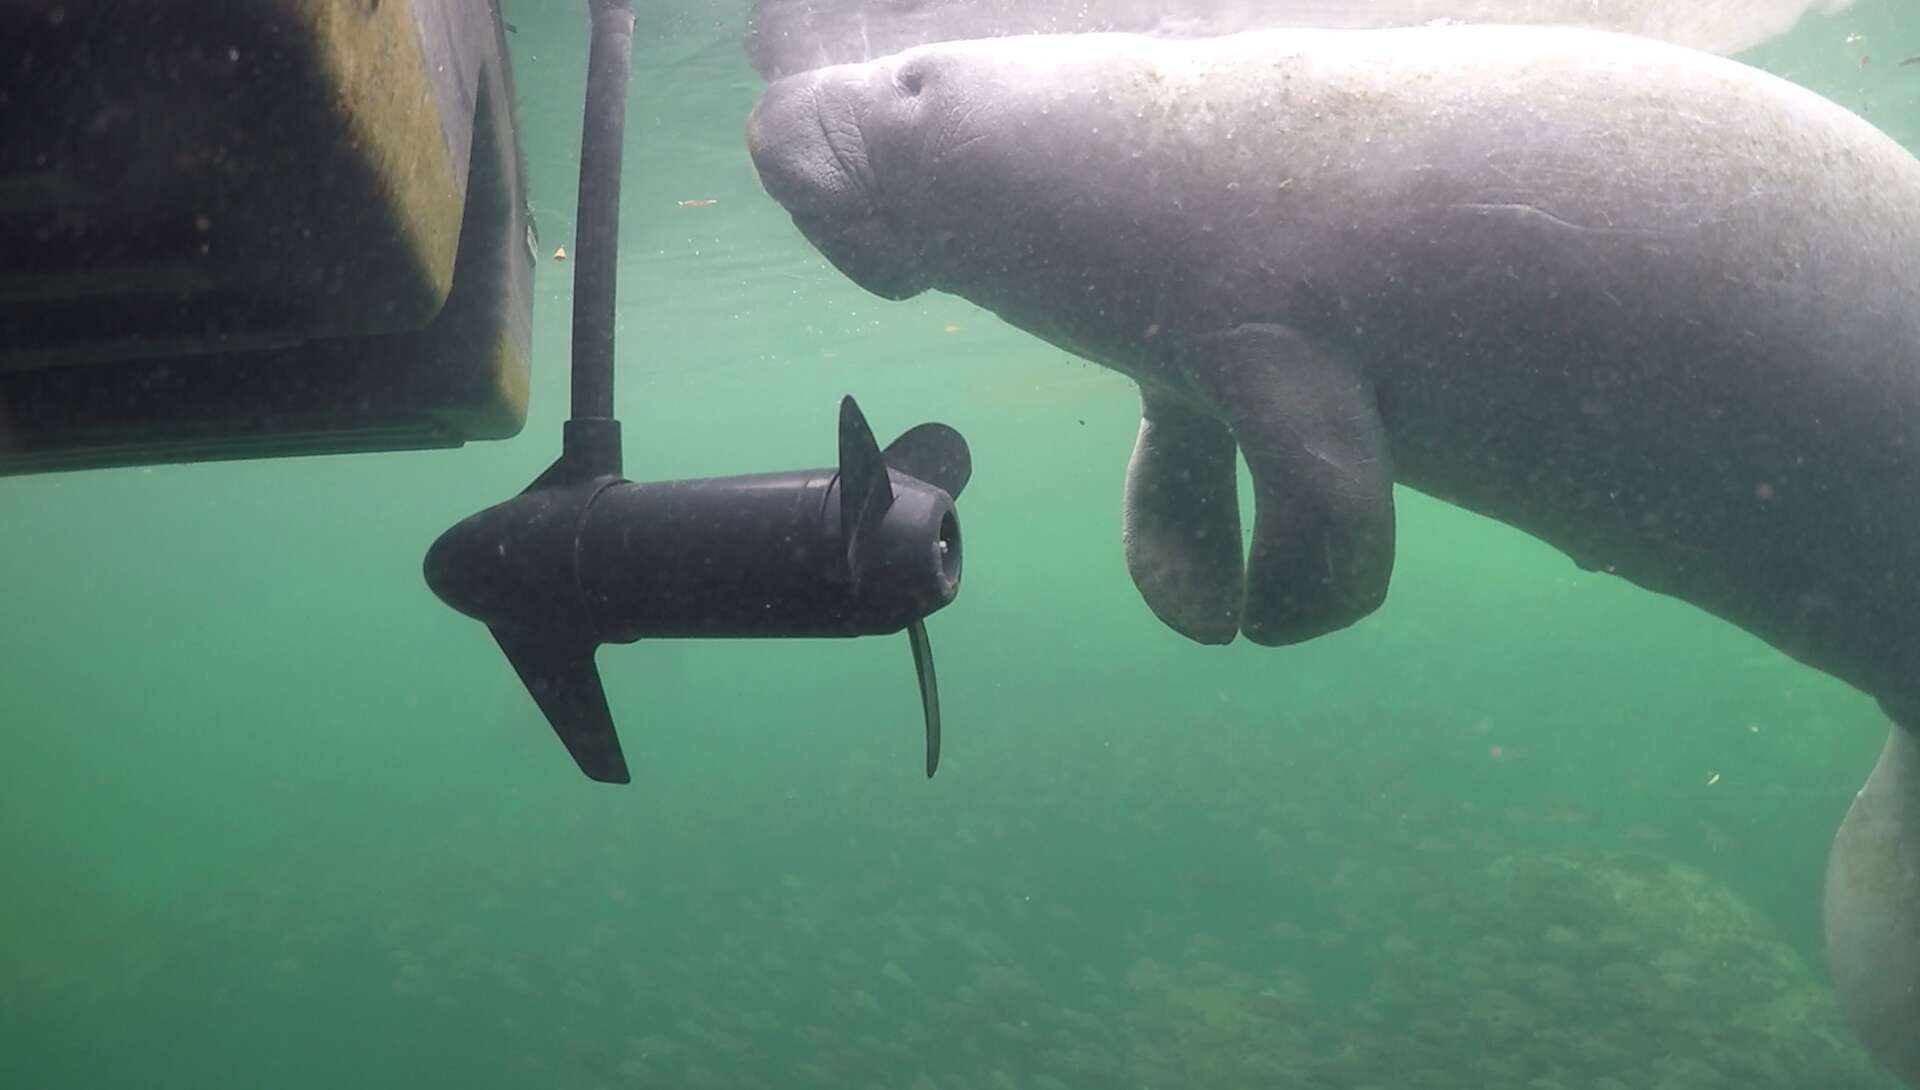 A Florida manatee swimming near a boat propeller